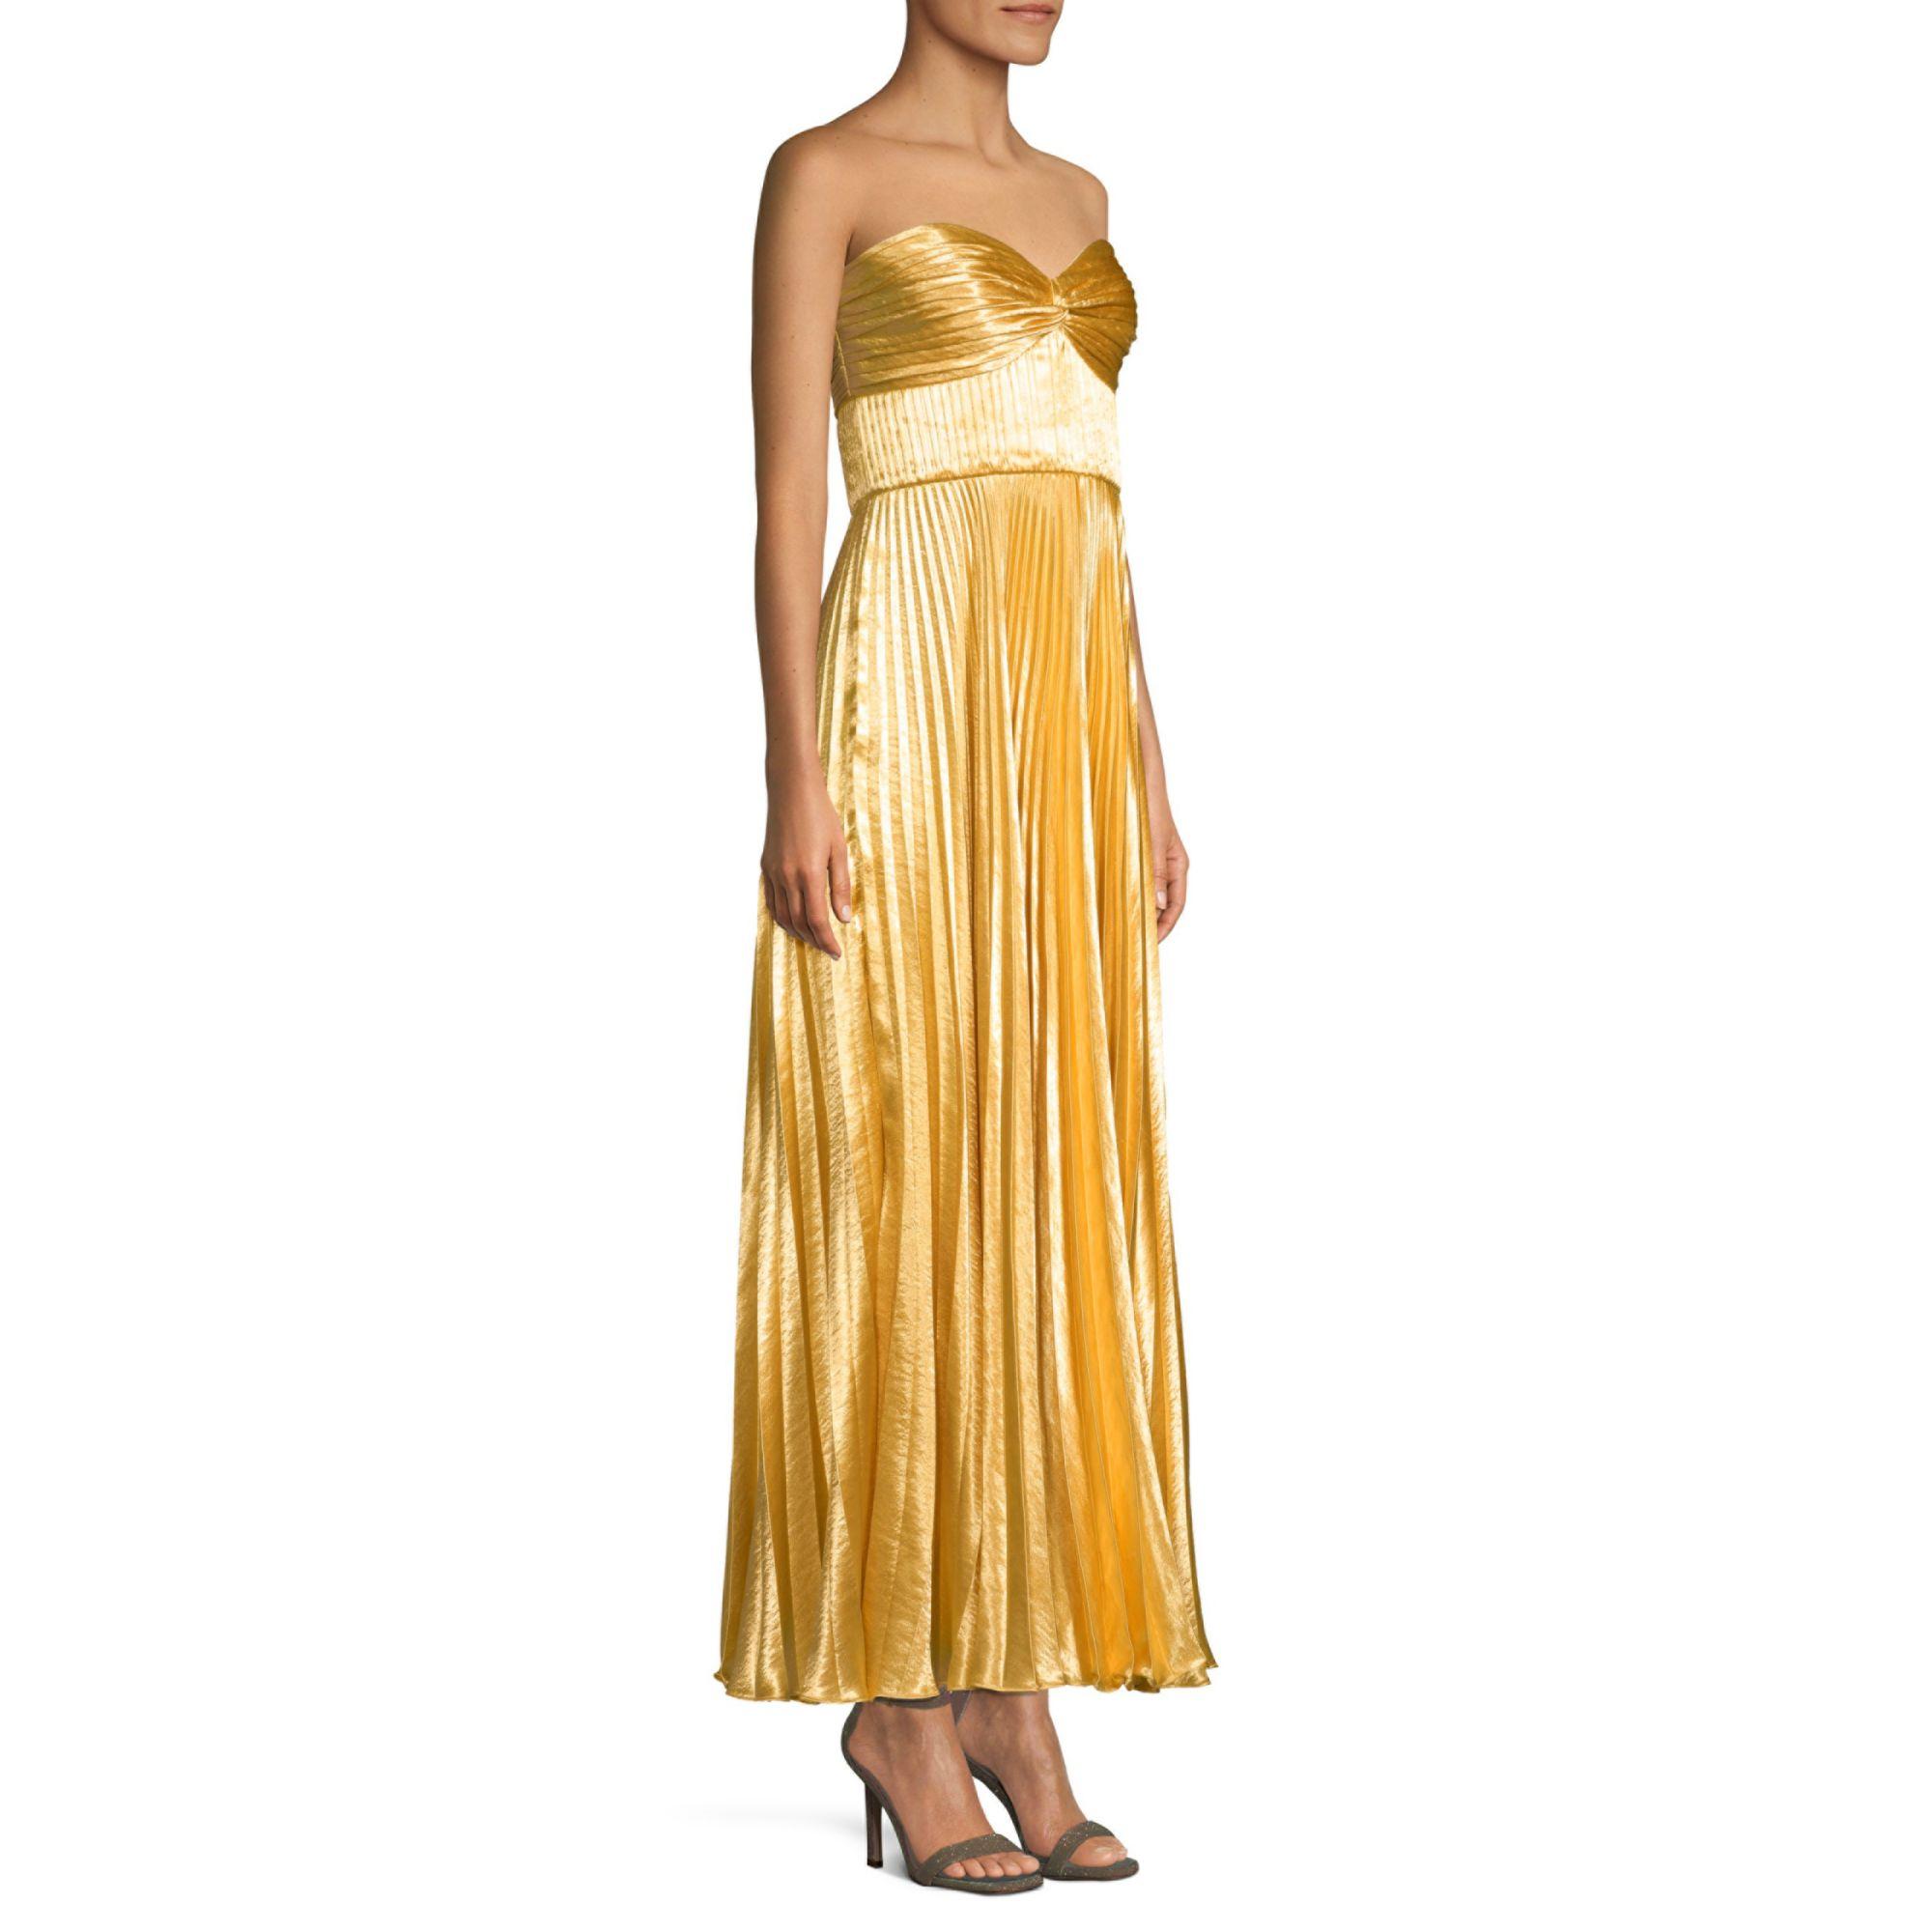 AMUR Synthetic Belle Pleat Gown in Gold (Metallic) - Lyst